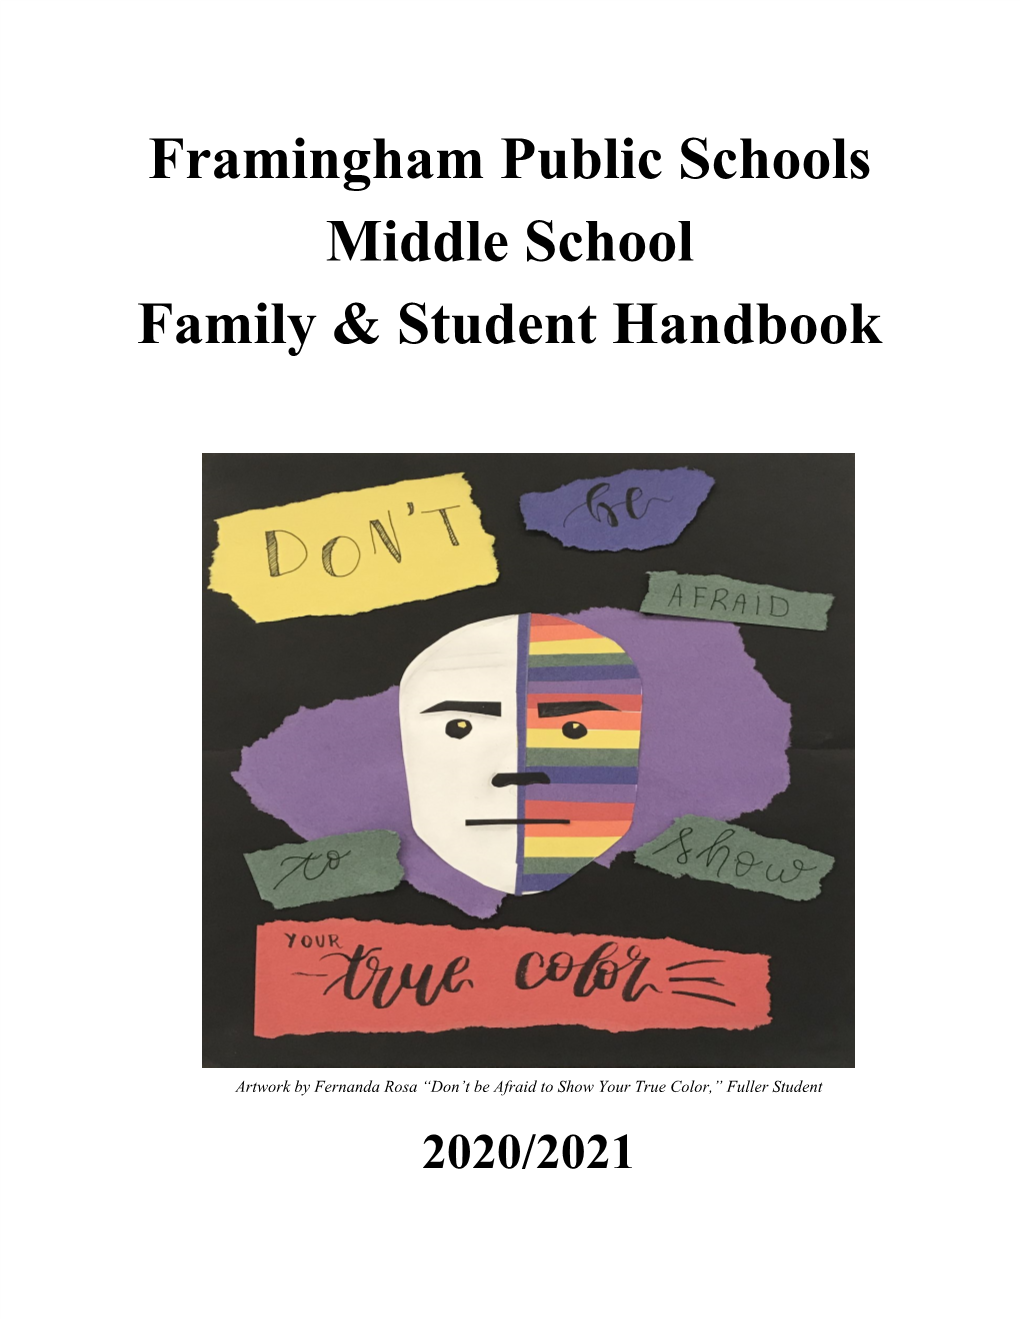 Framingham Public Schools Middle School Family & Student Handbook